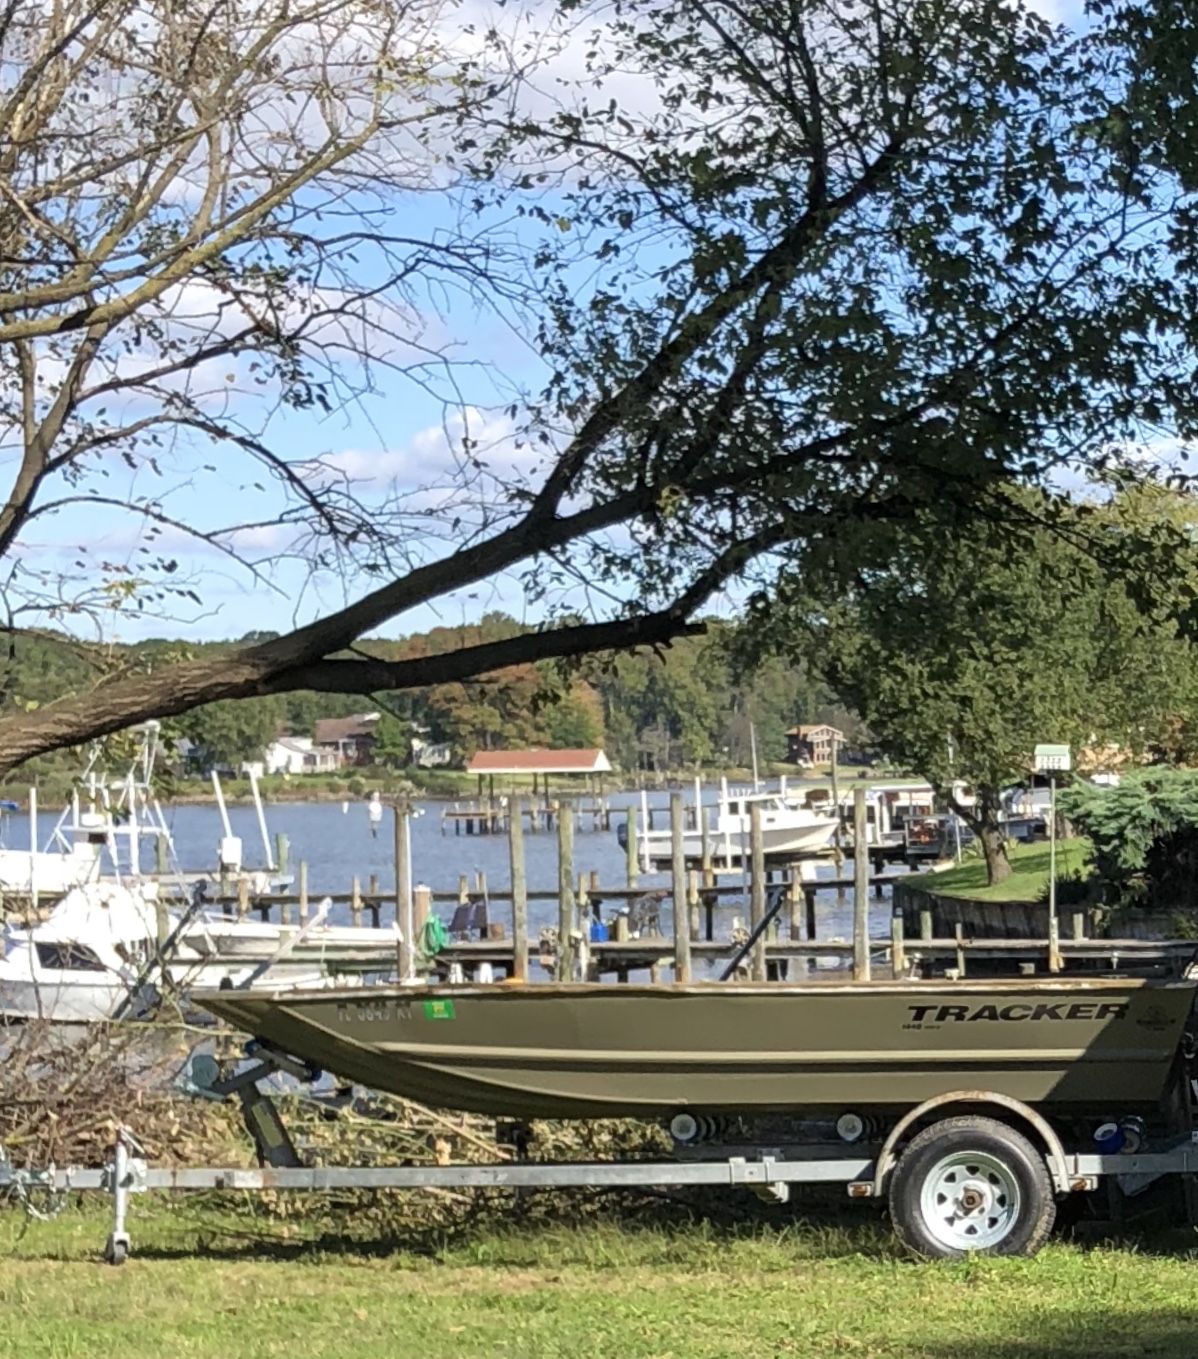 Boat trailer